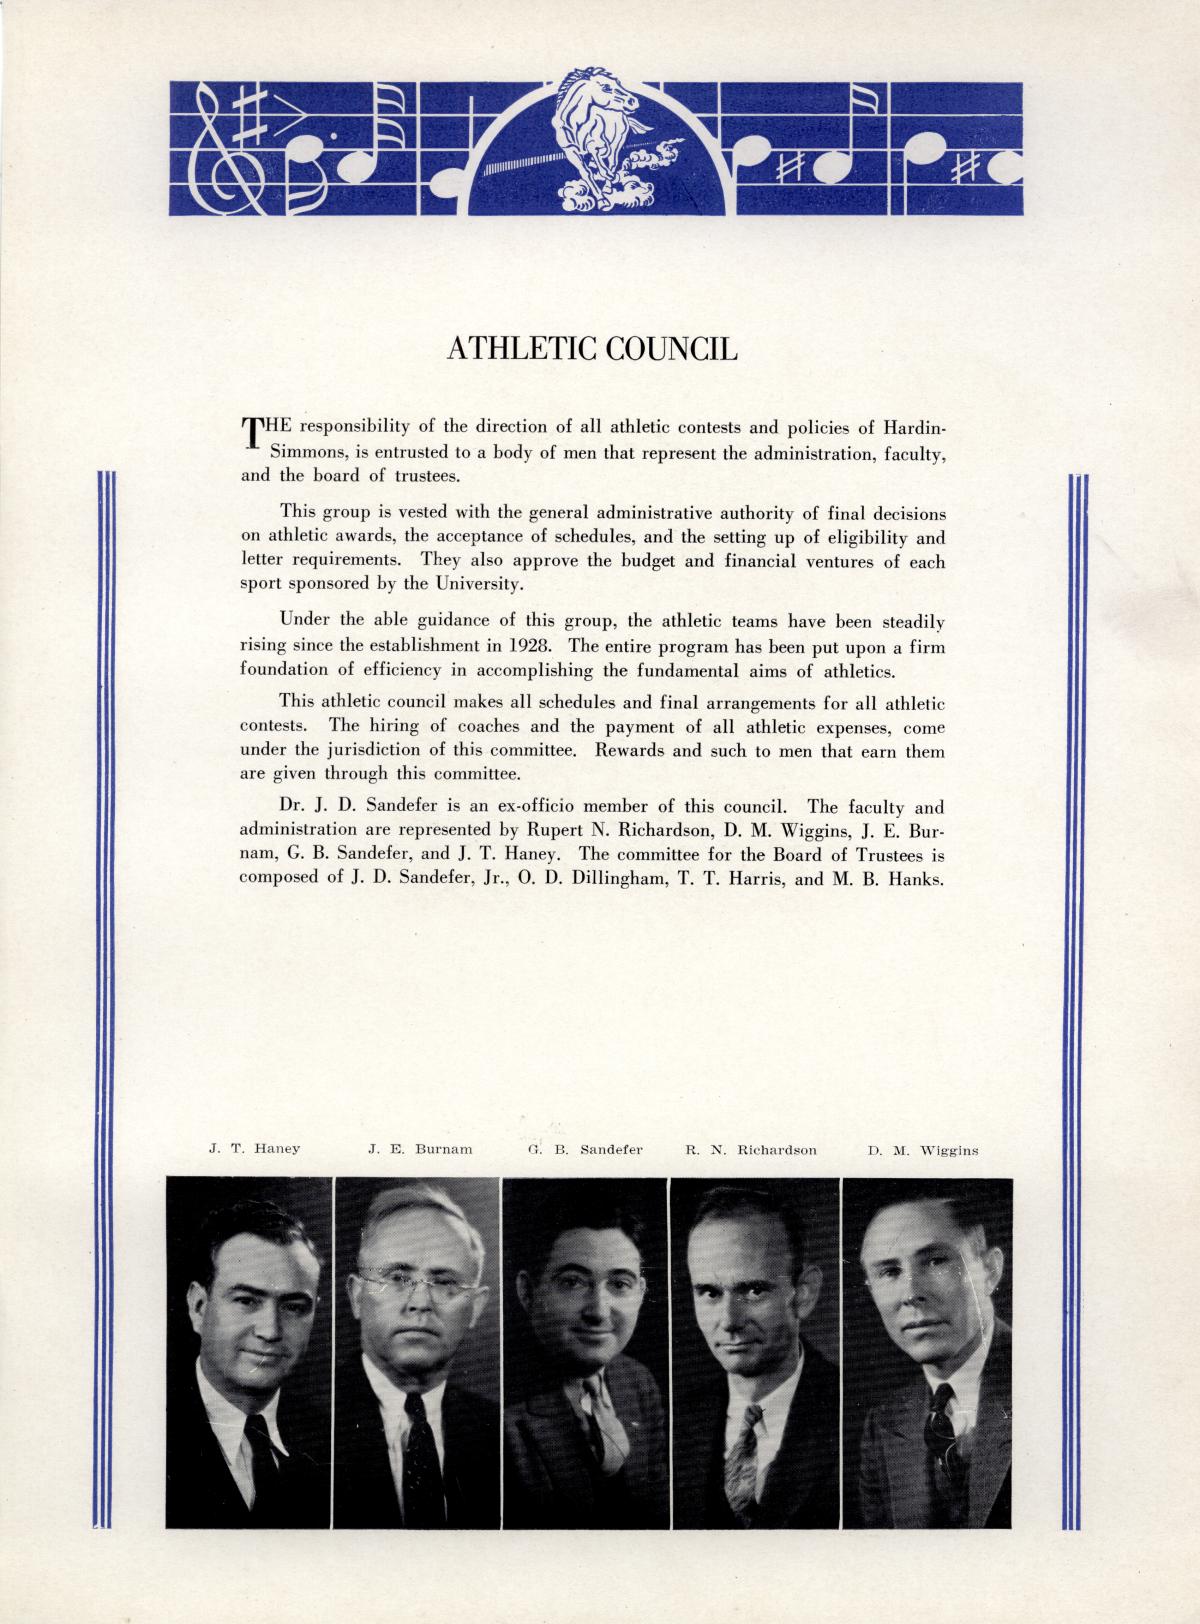 The Bronco, Yearbook of Hardin-Simmons University, 1935
                                                
                                                    121
                                                